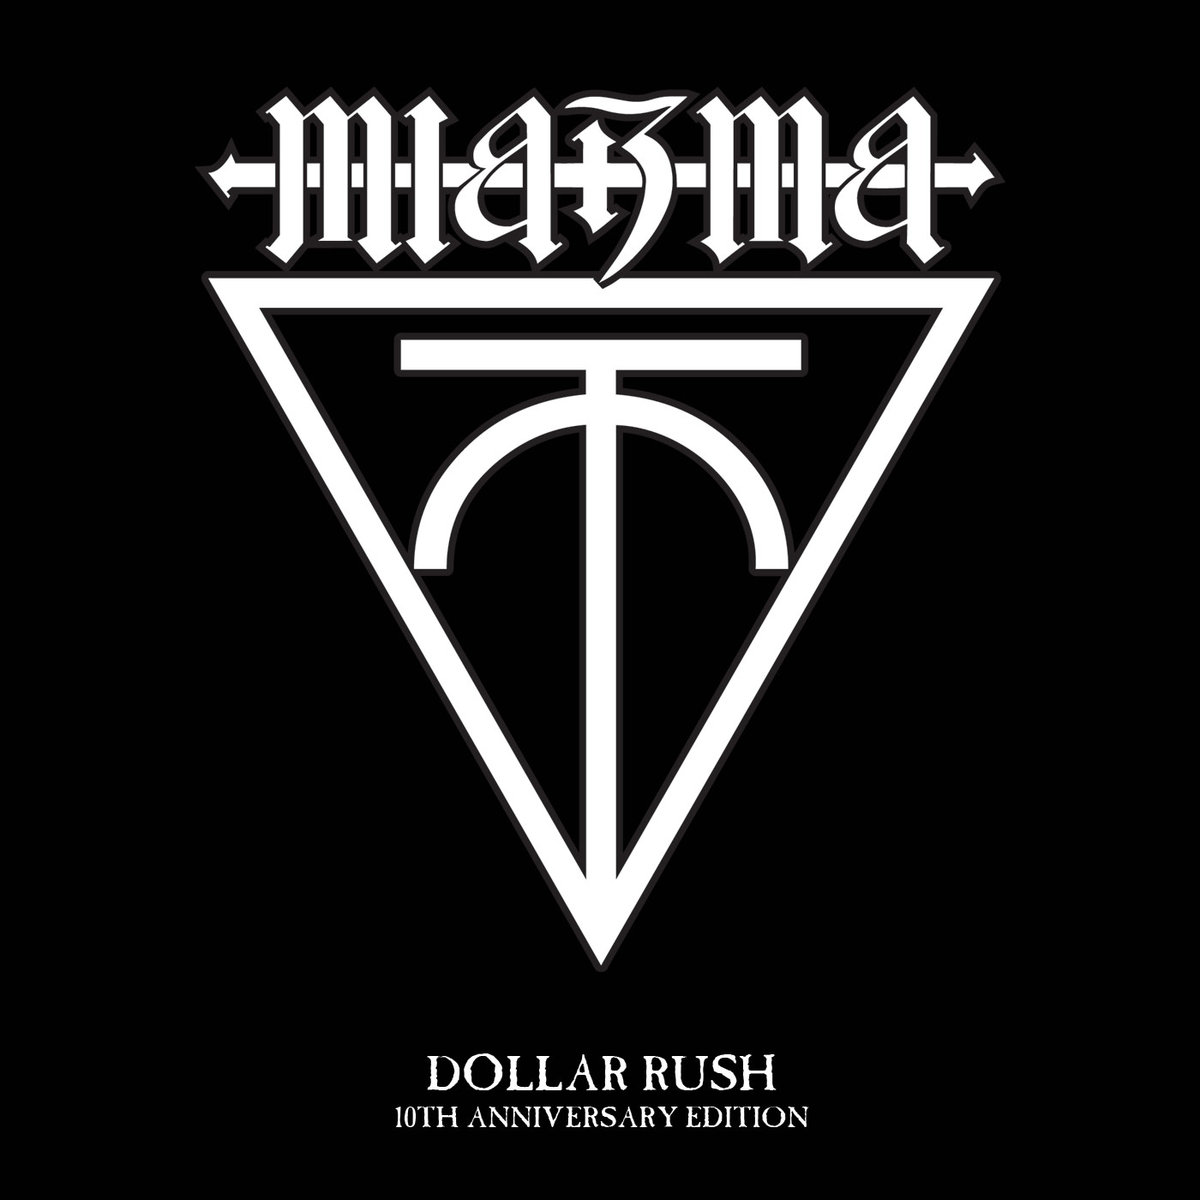 Miazma - Dollar Rush (10th Anniversary Gothic Rock Limited Edition)